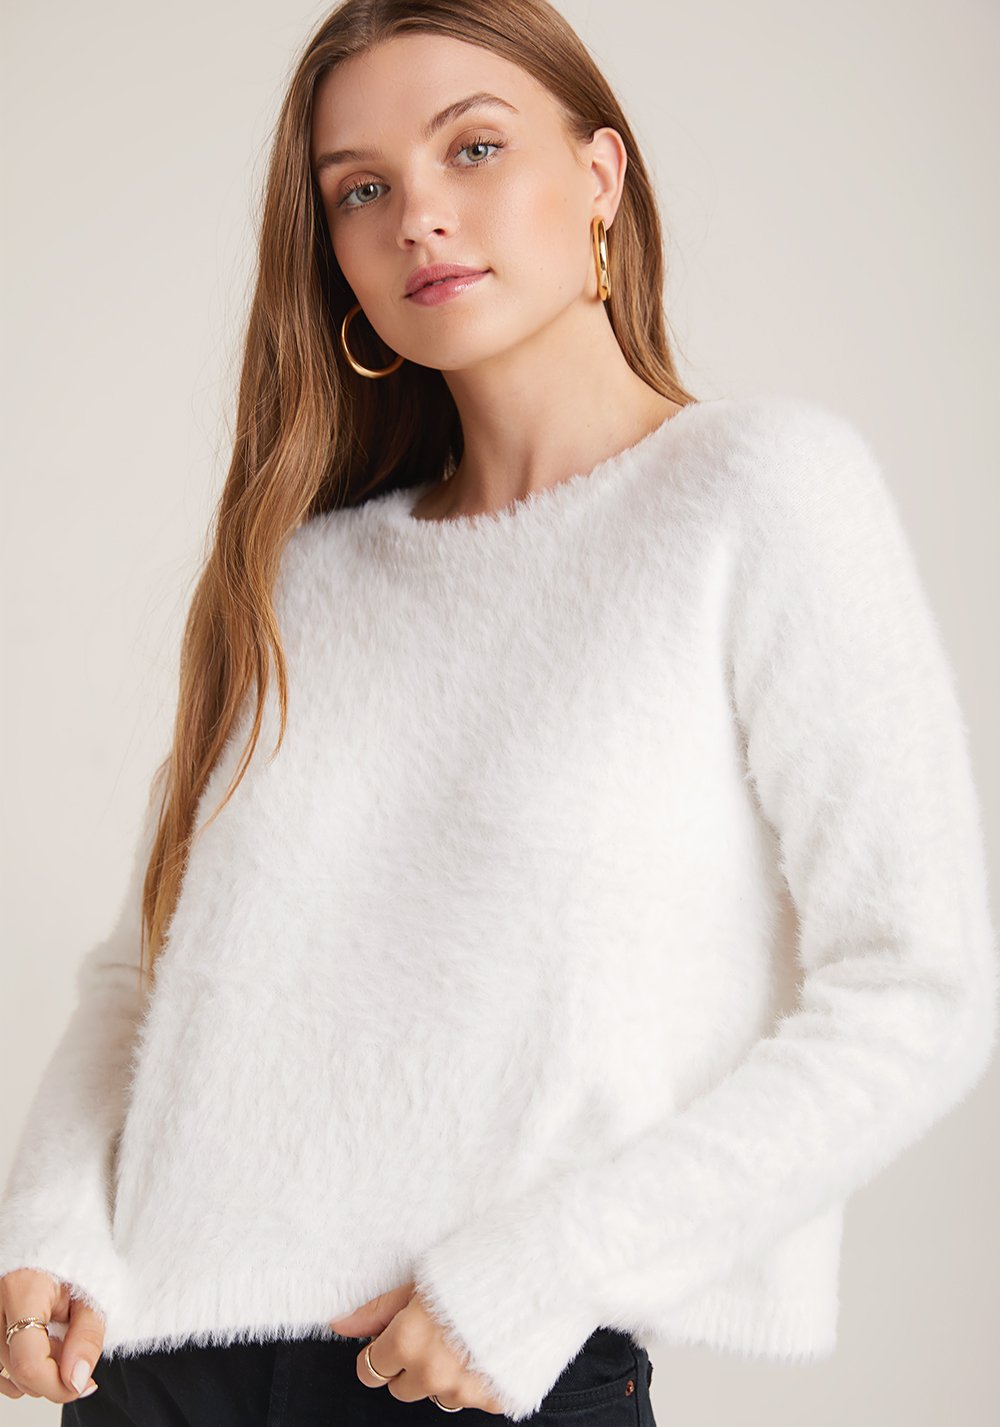 Bella Dahl - Slouchy Sweater in Winter White